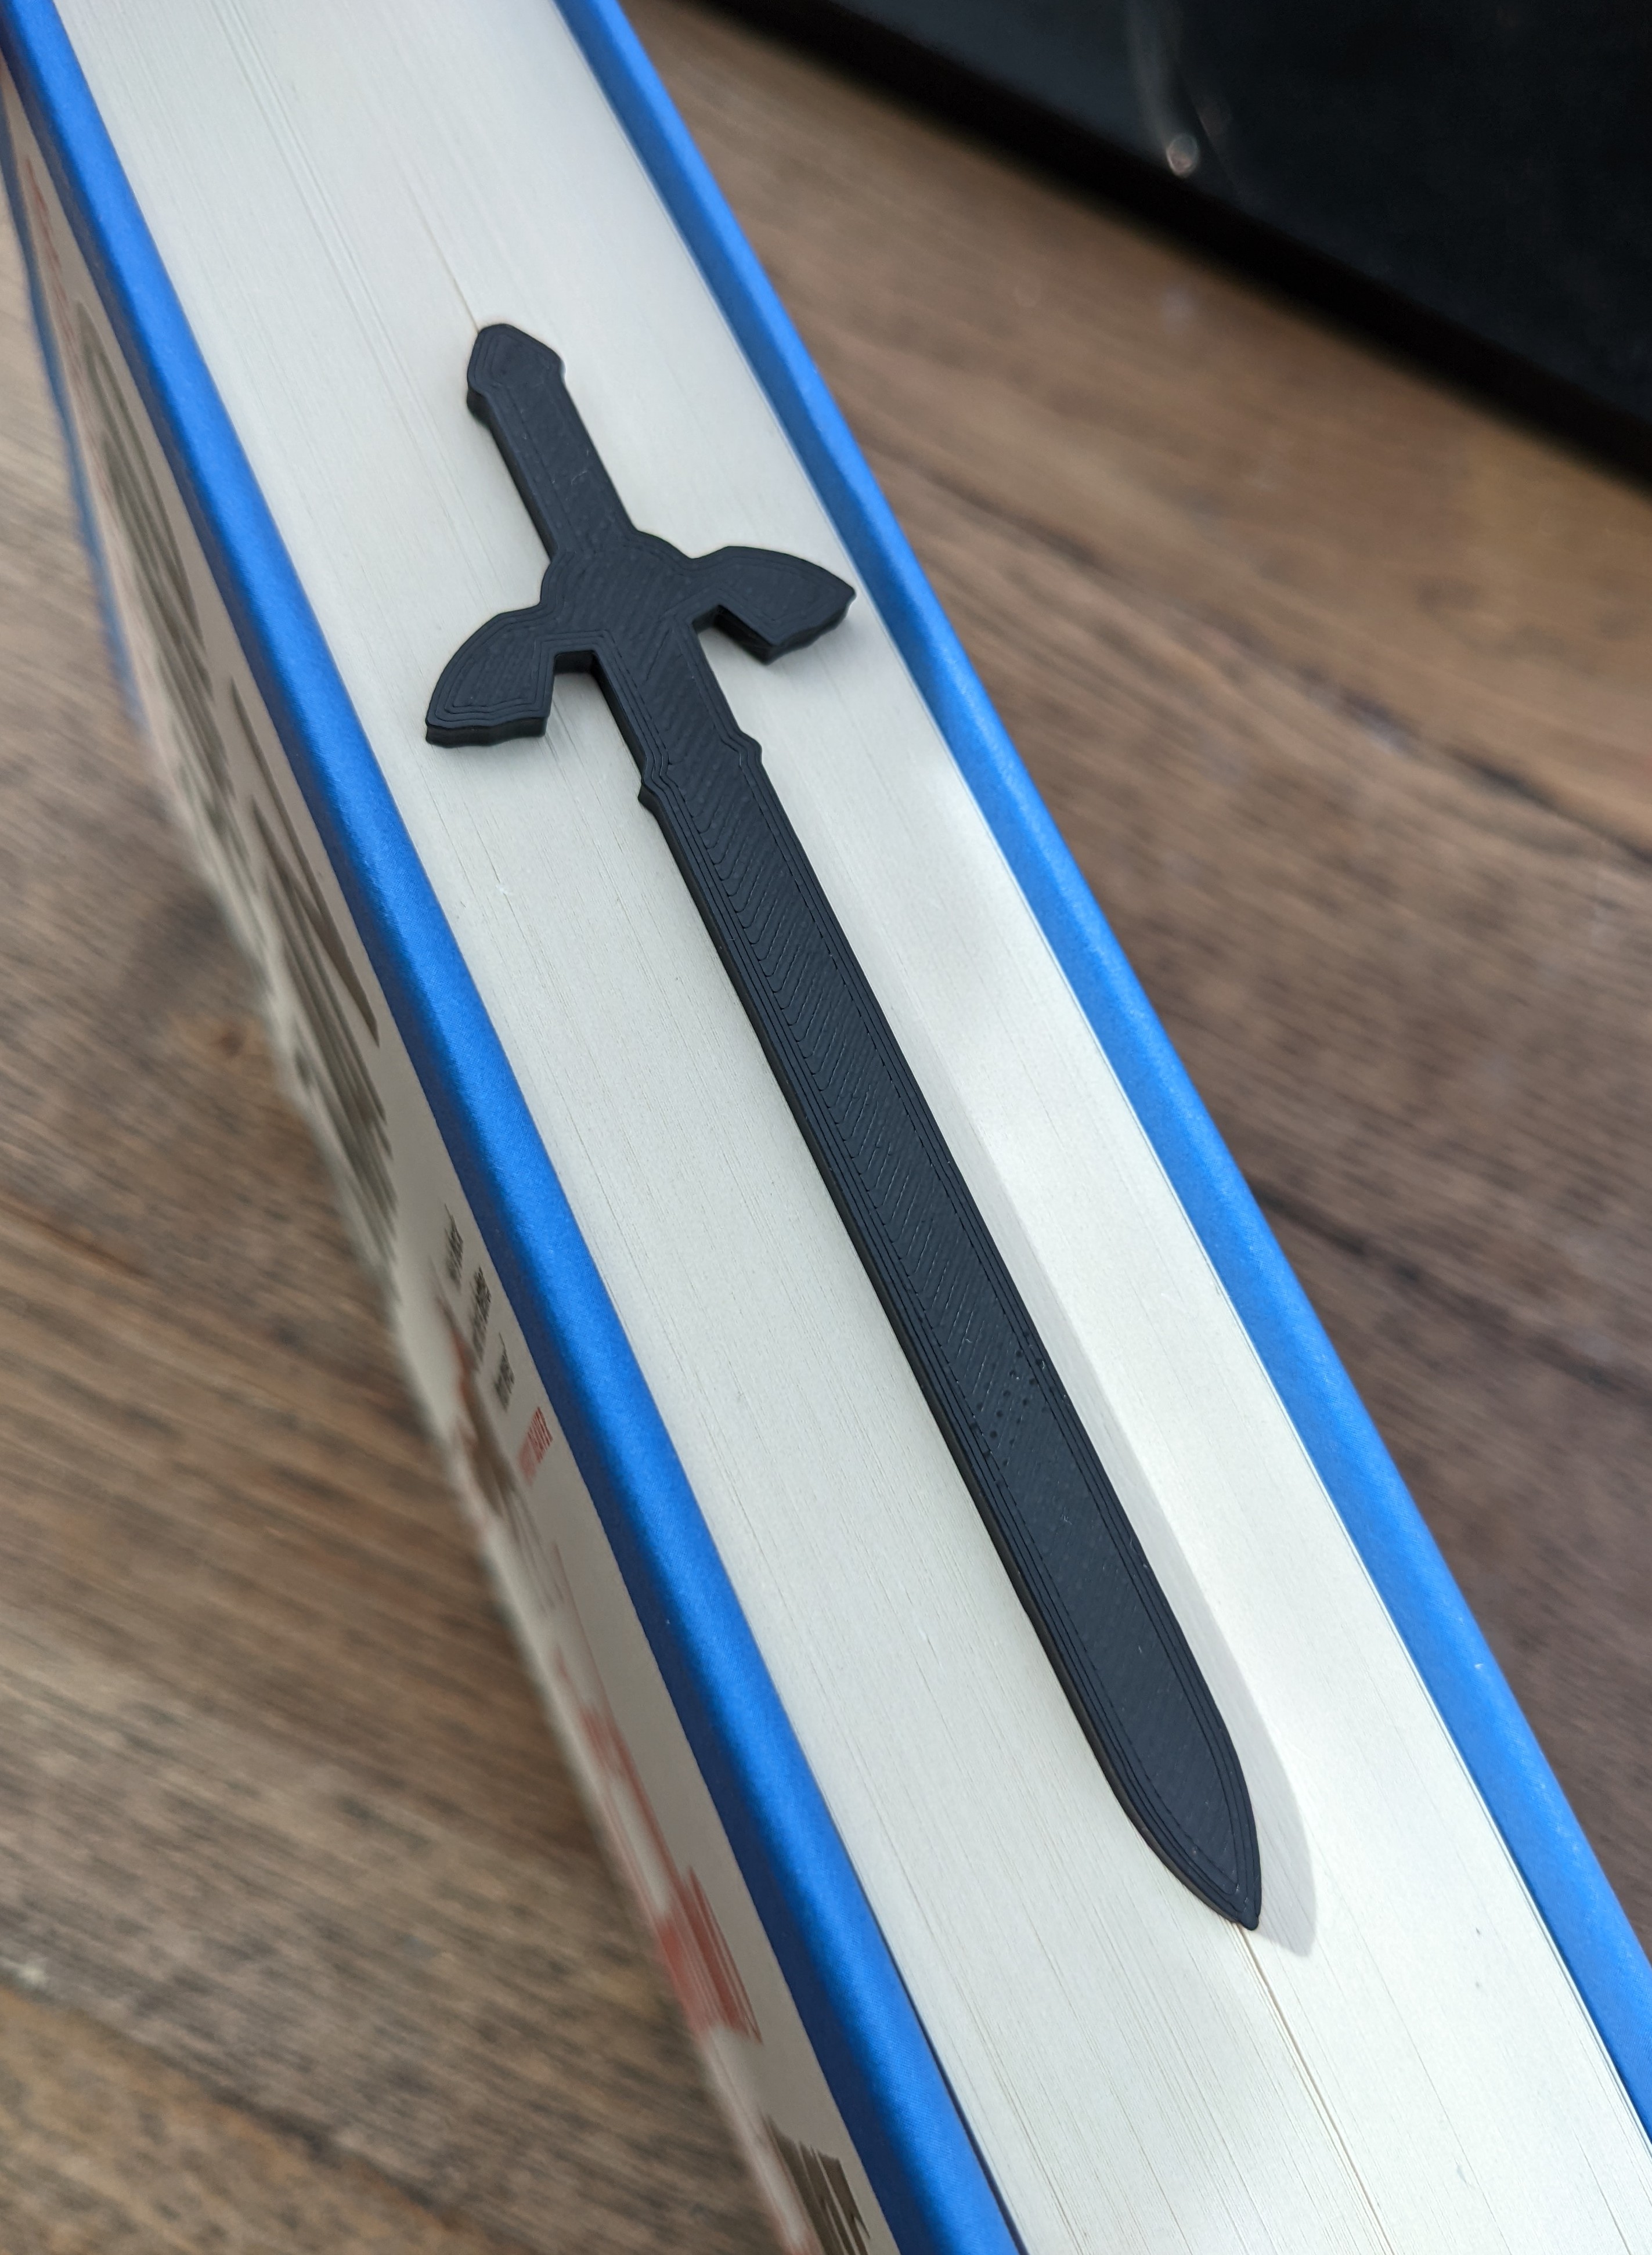 Bookmark - The Master Sword